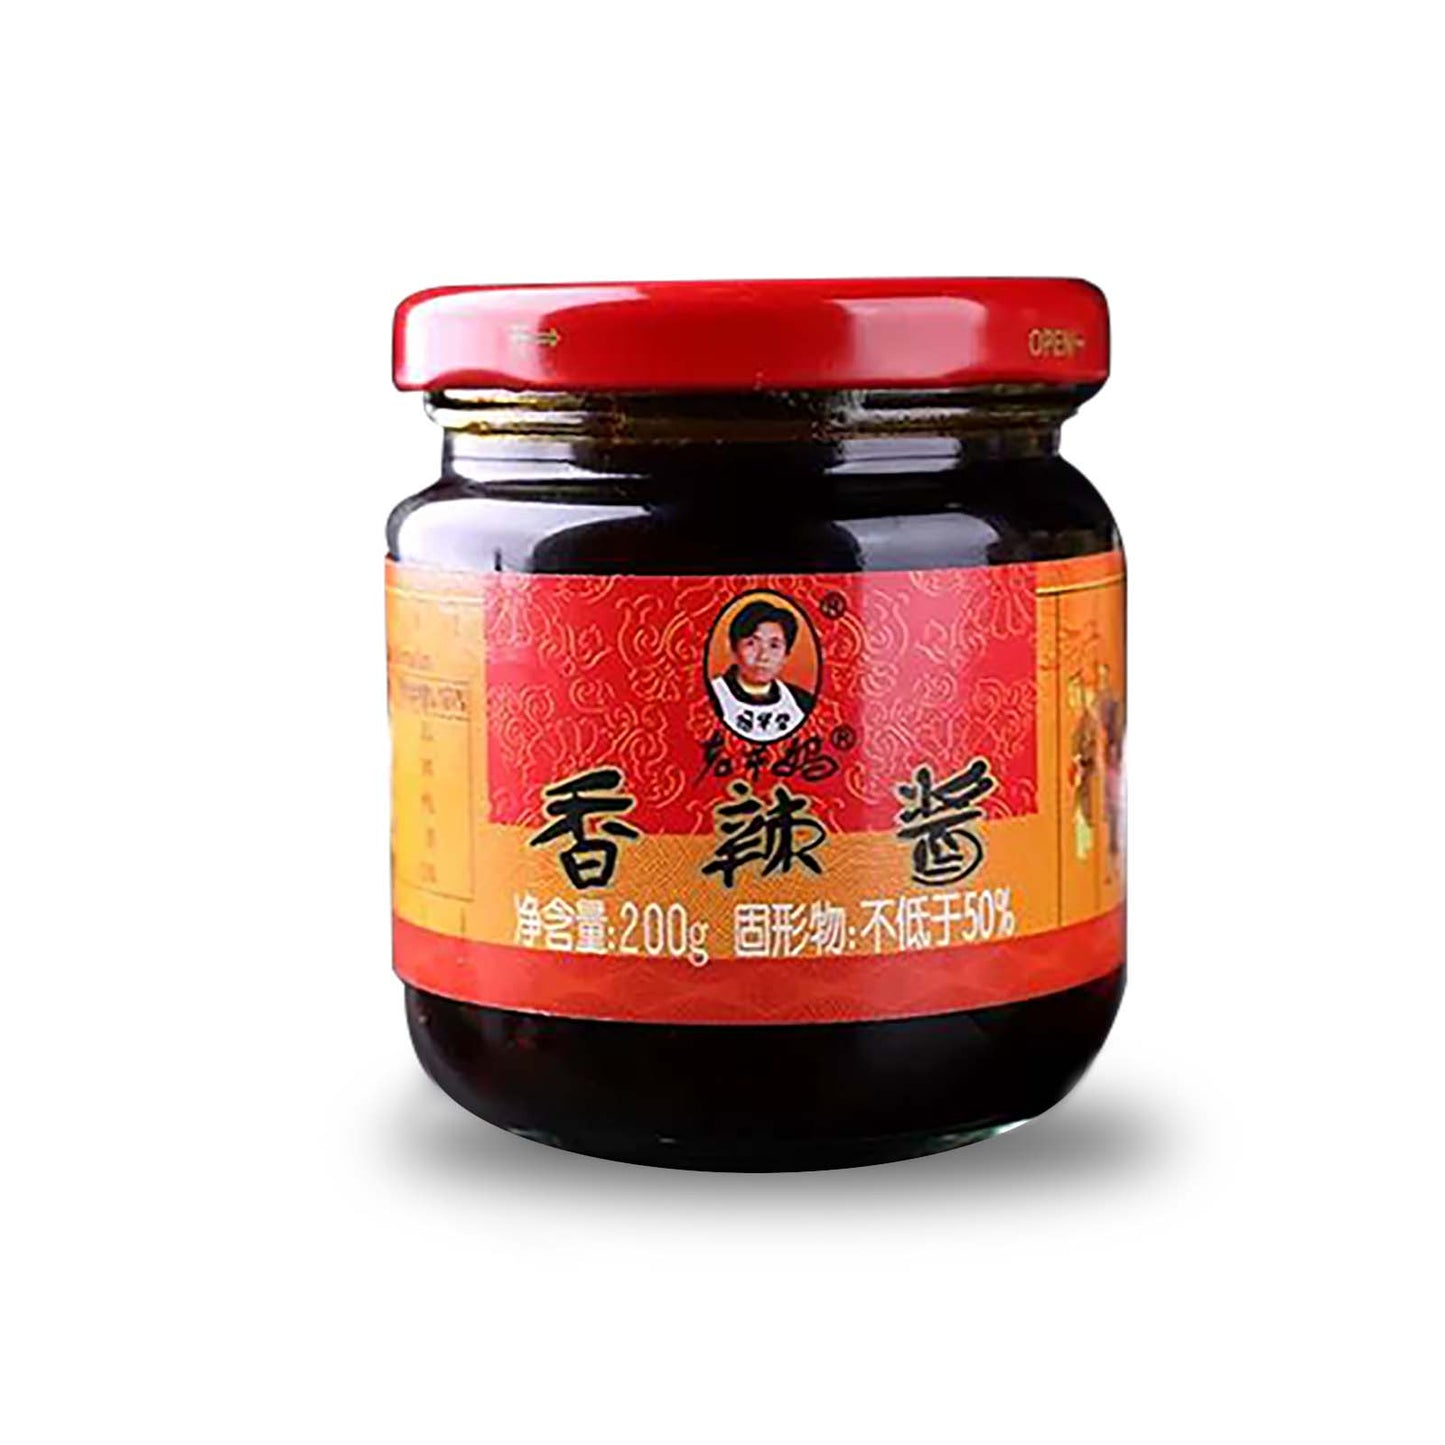 Laoganma - Chili Oil Spicy Sauce 200g